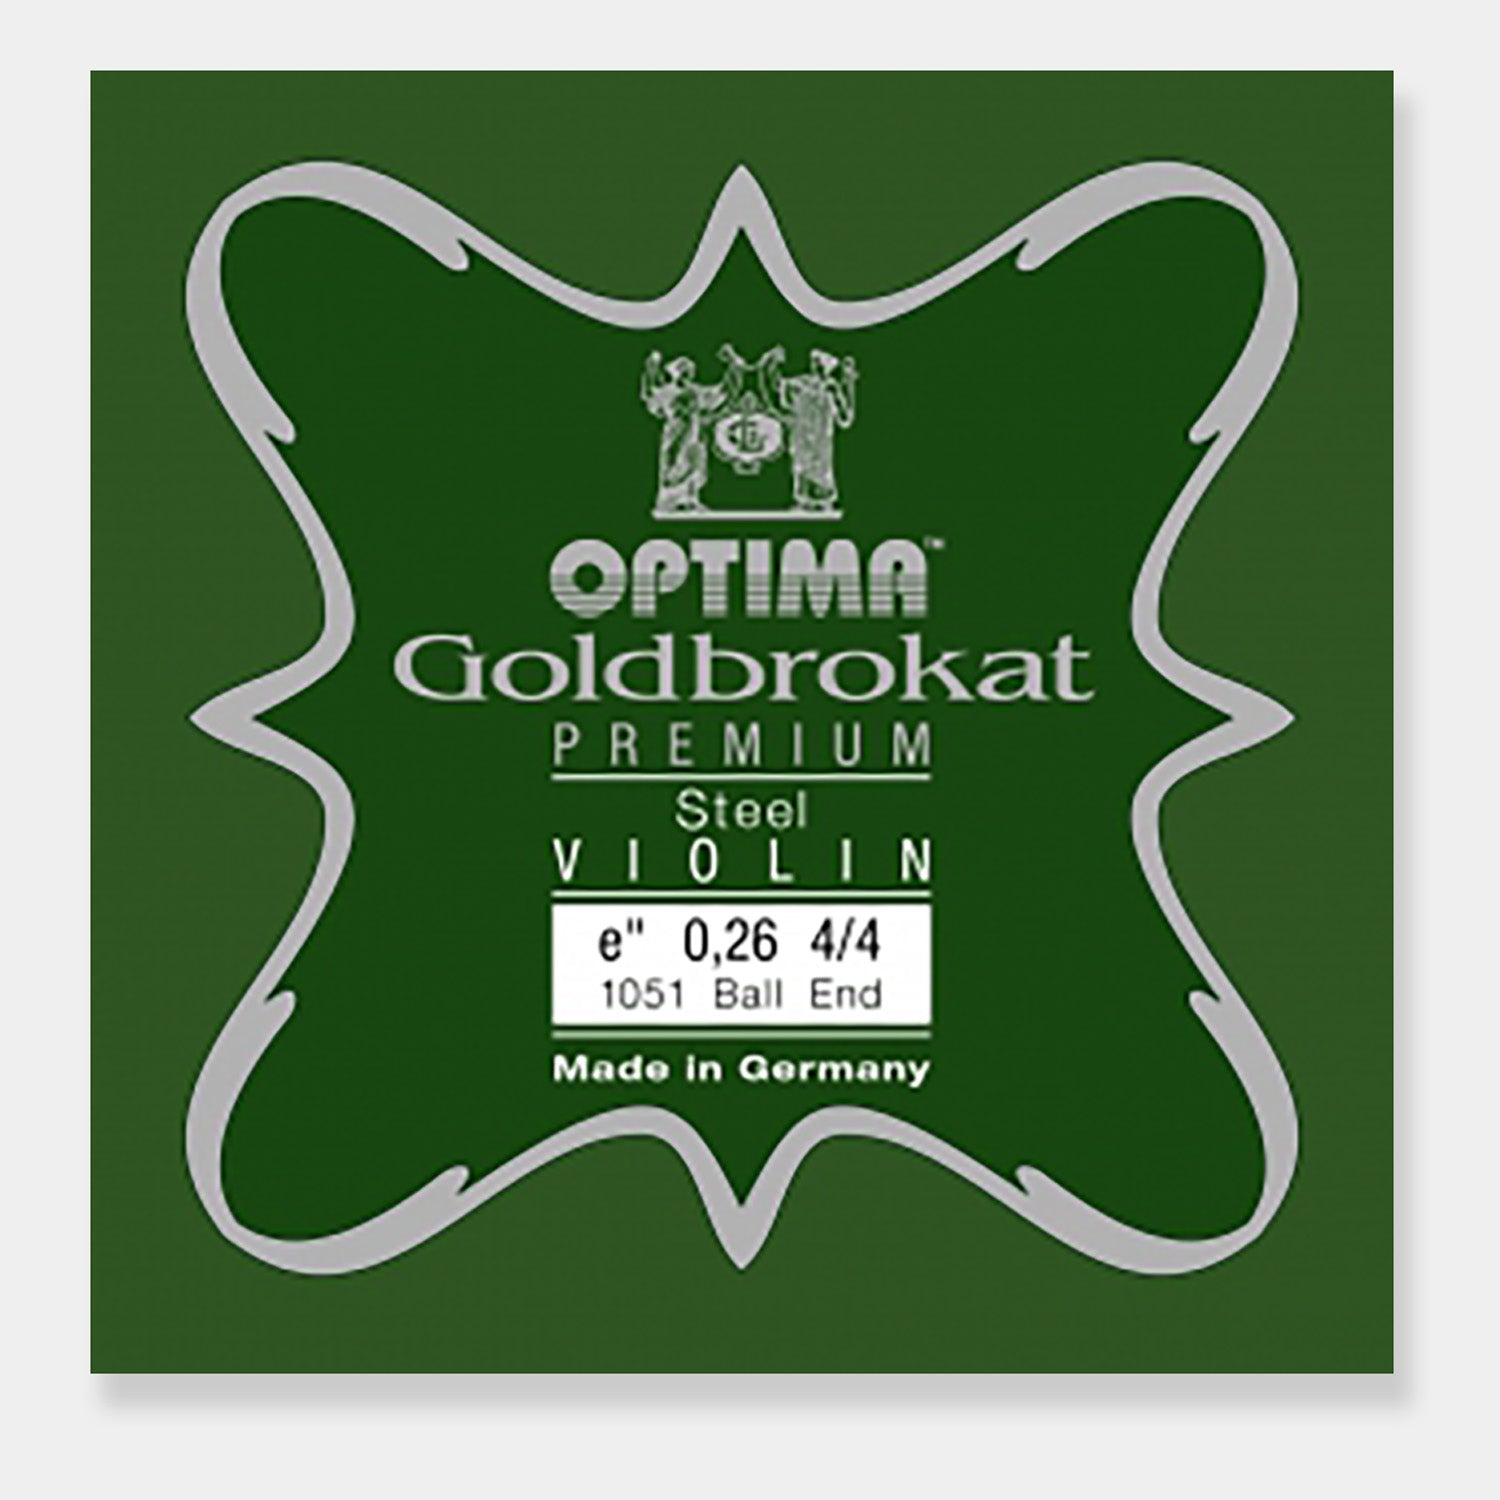 Goldbrokat Premium Violin E String